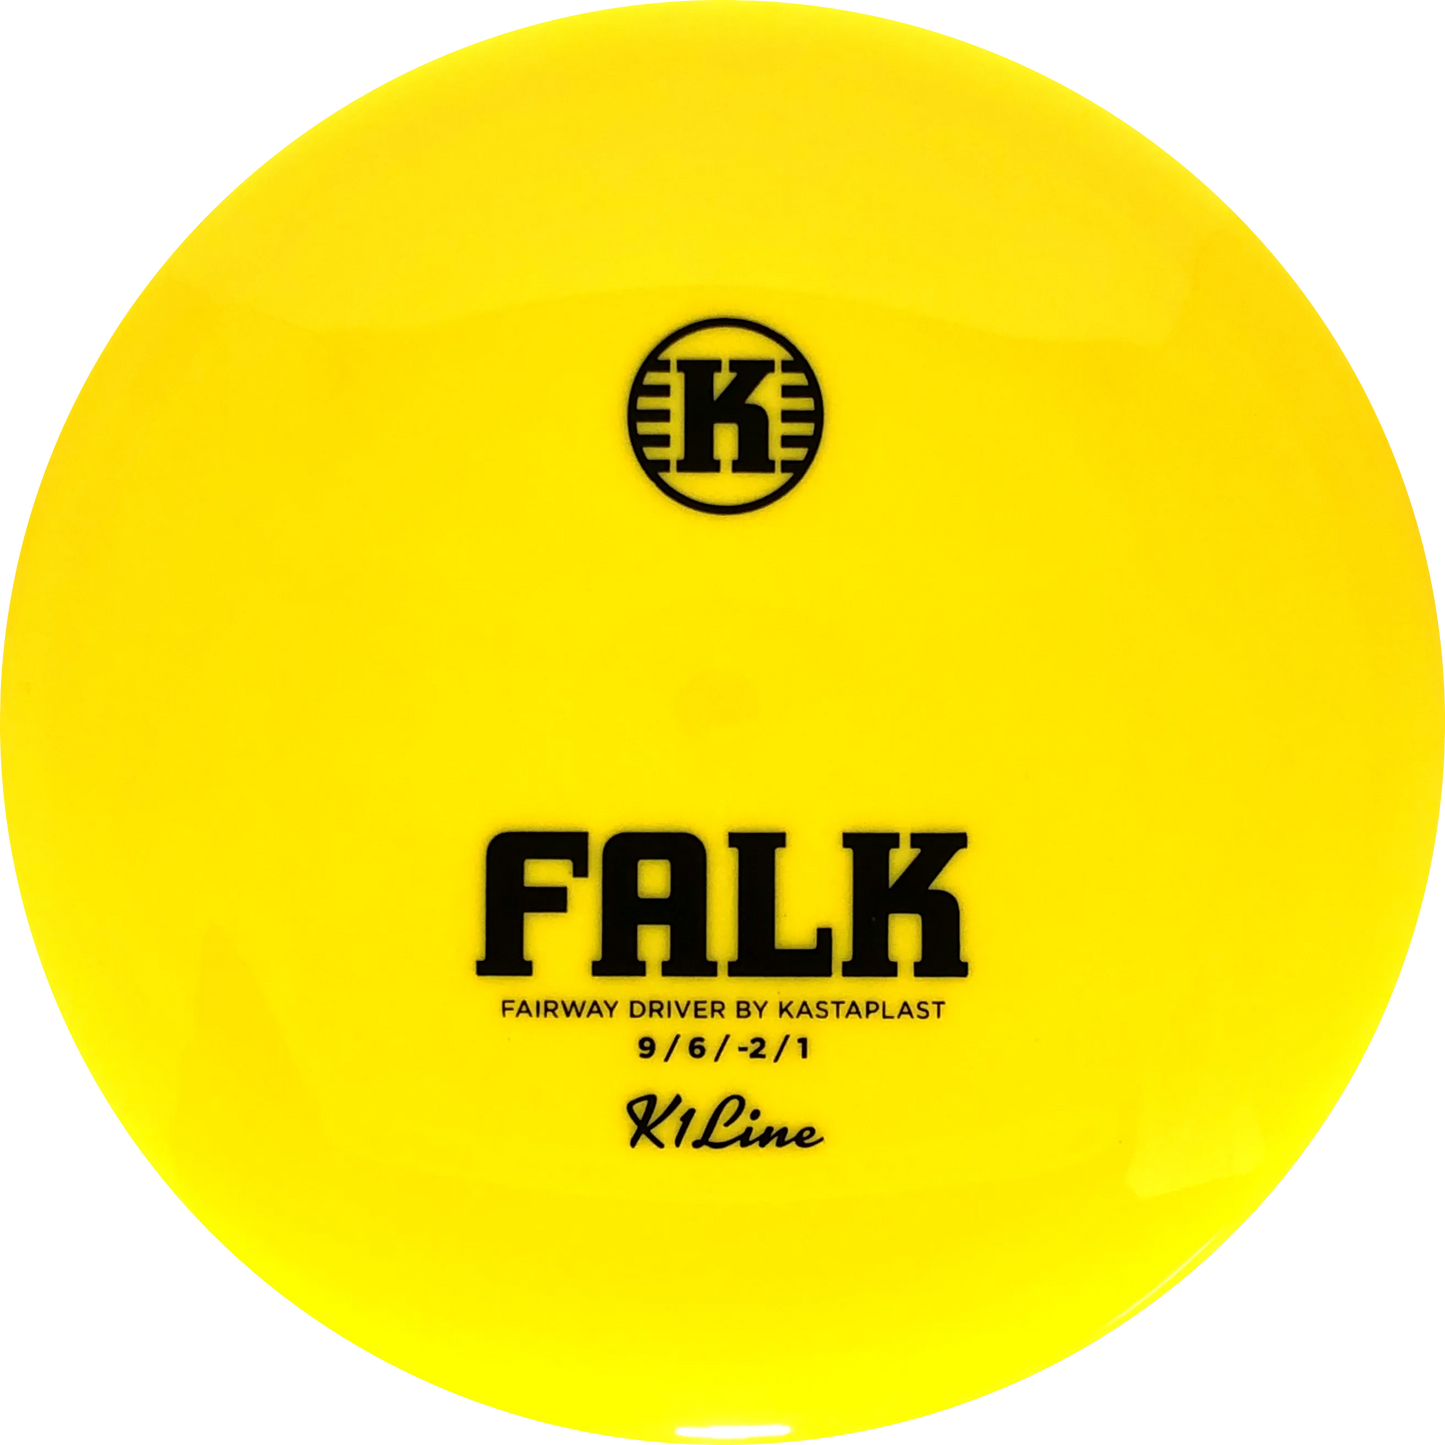 K1 Falk